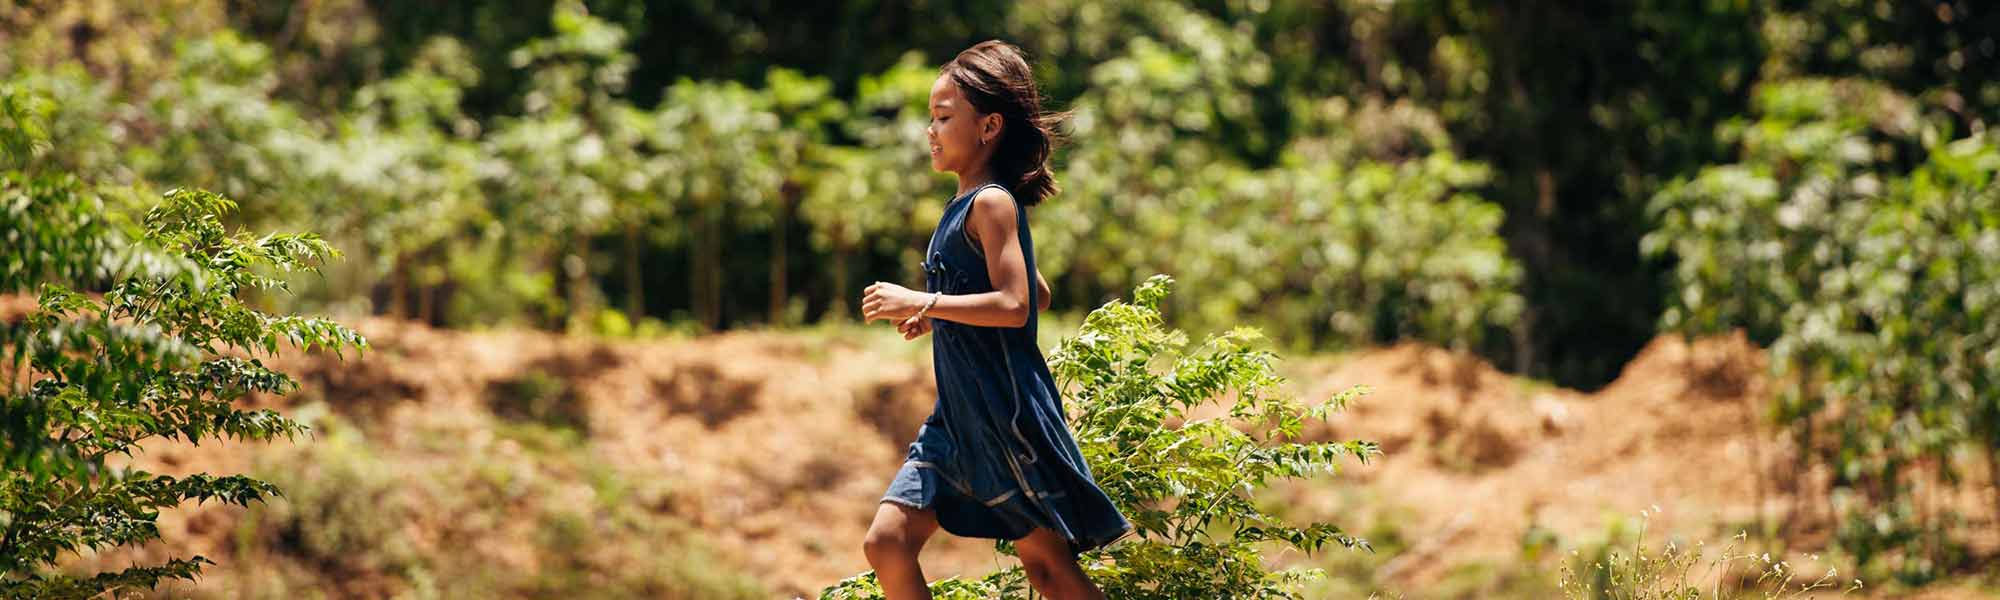 Jente fra Vietnam løper i fint naturlandskap.